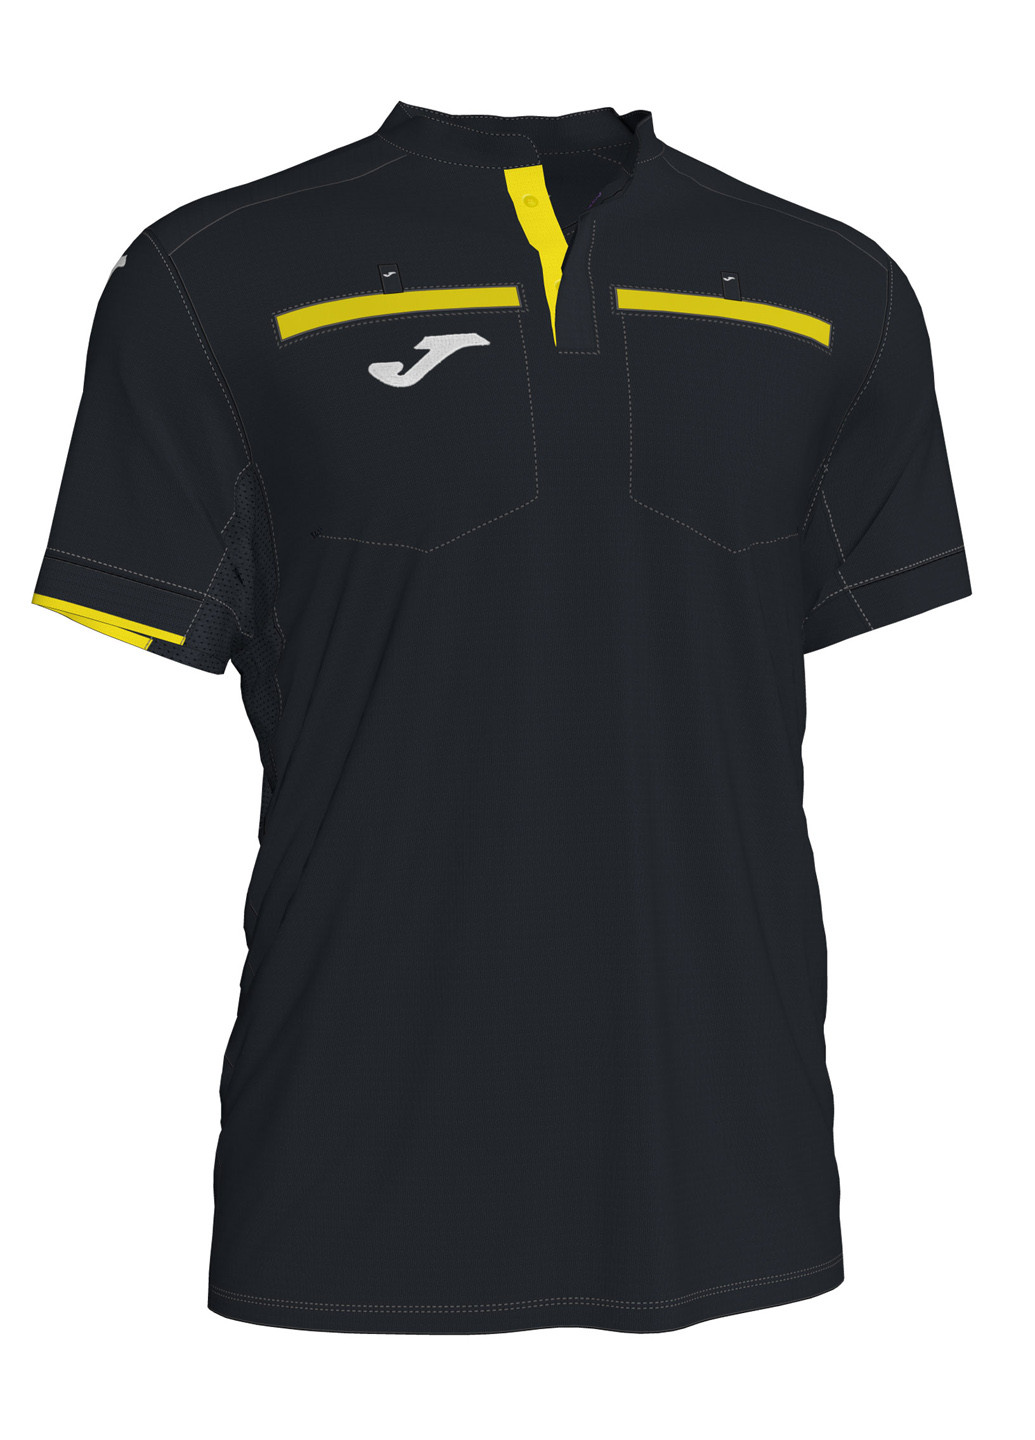 Черная футболка-судейская футболка referee для мужчин Joma с логотипом